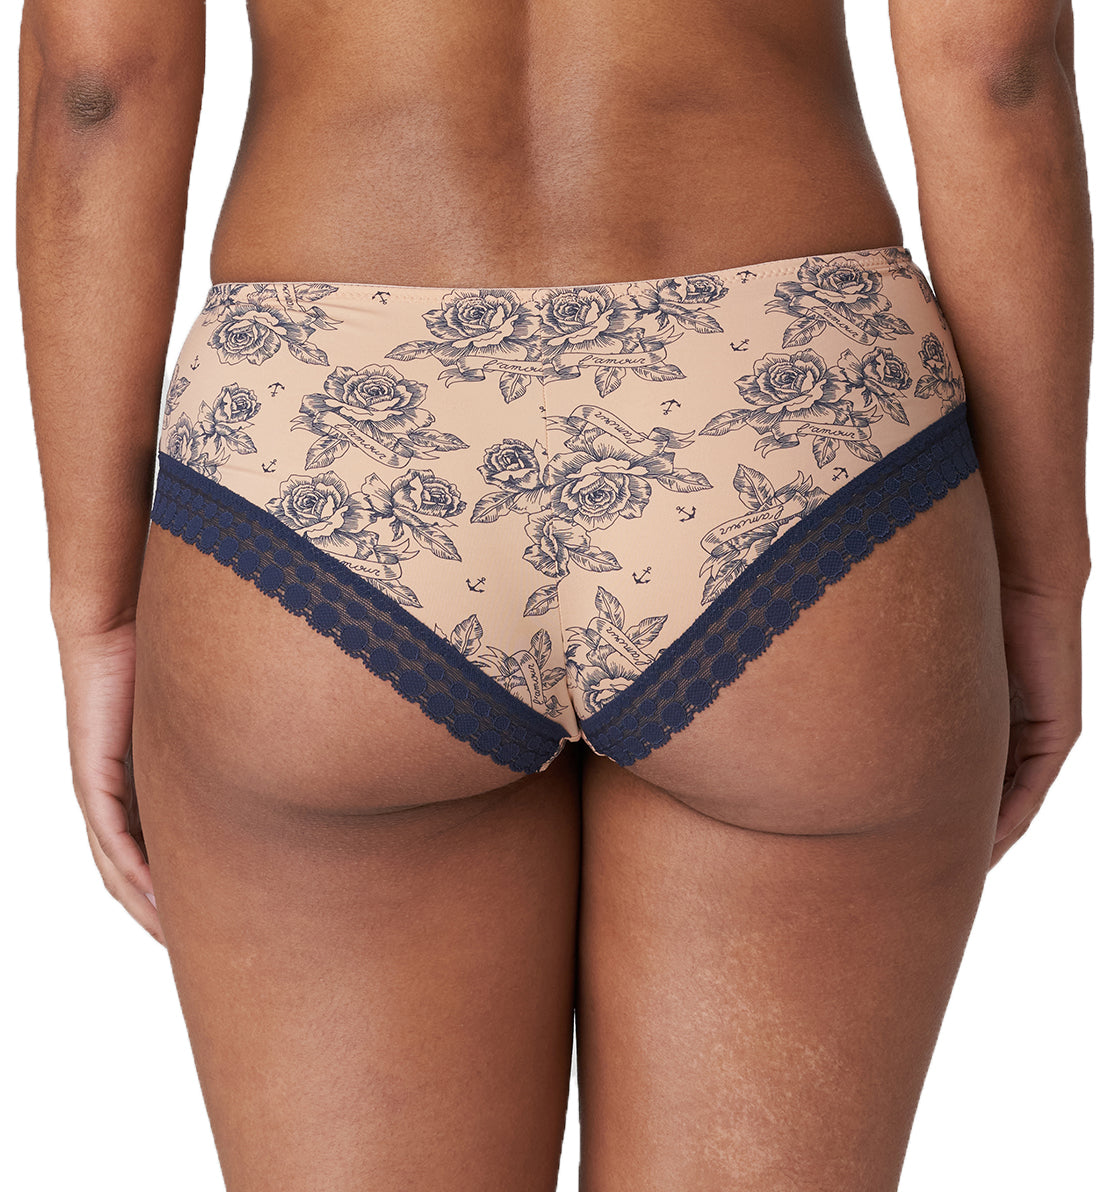 PrimaDonna Twist Matama Matching Hotpant Panty (0542192),Small,Light Tan - Light Tan,Small